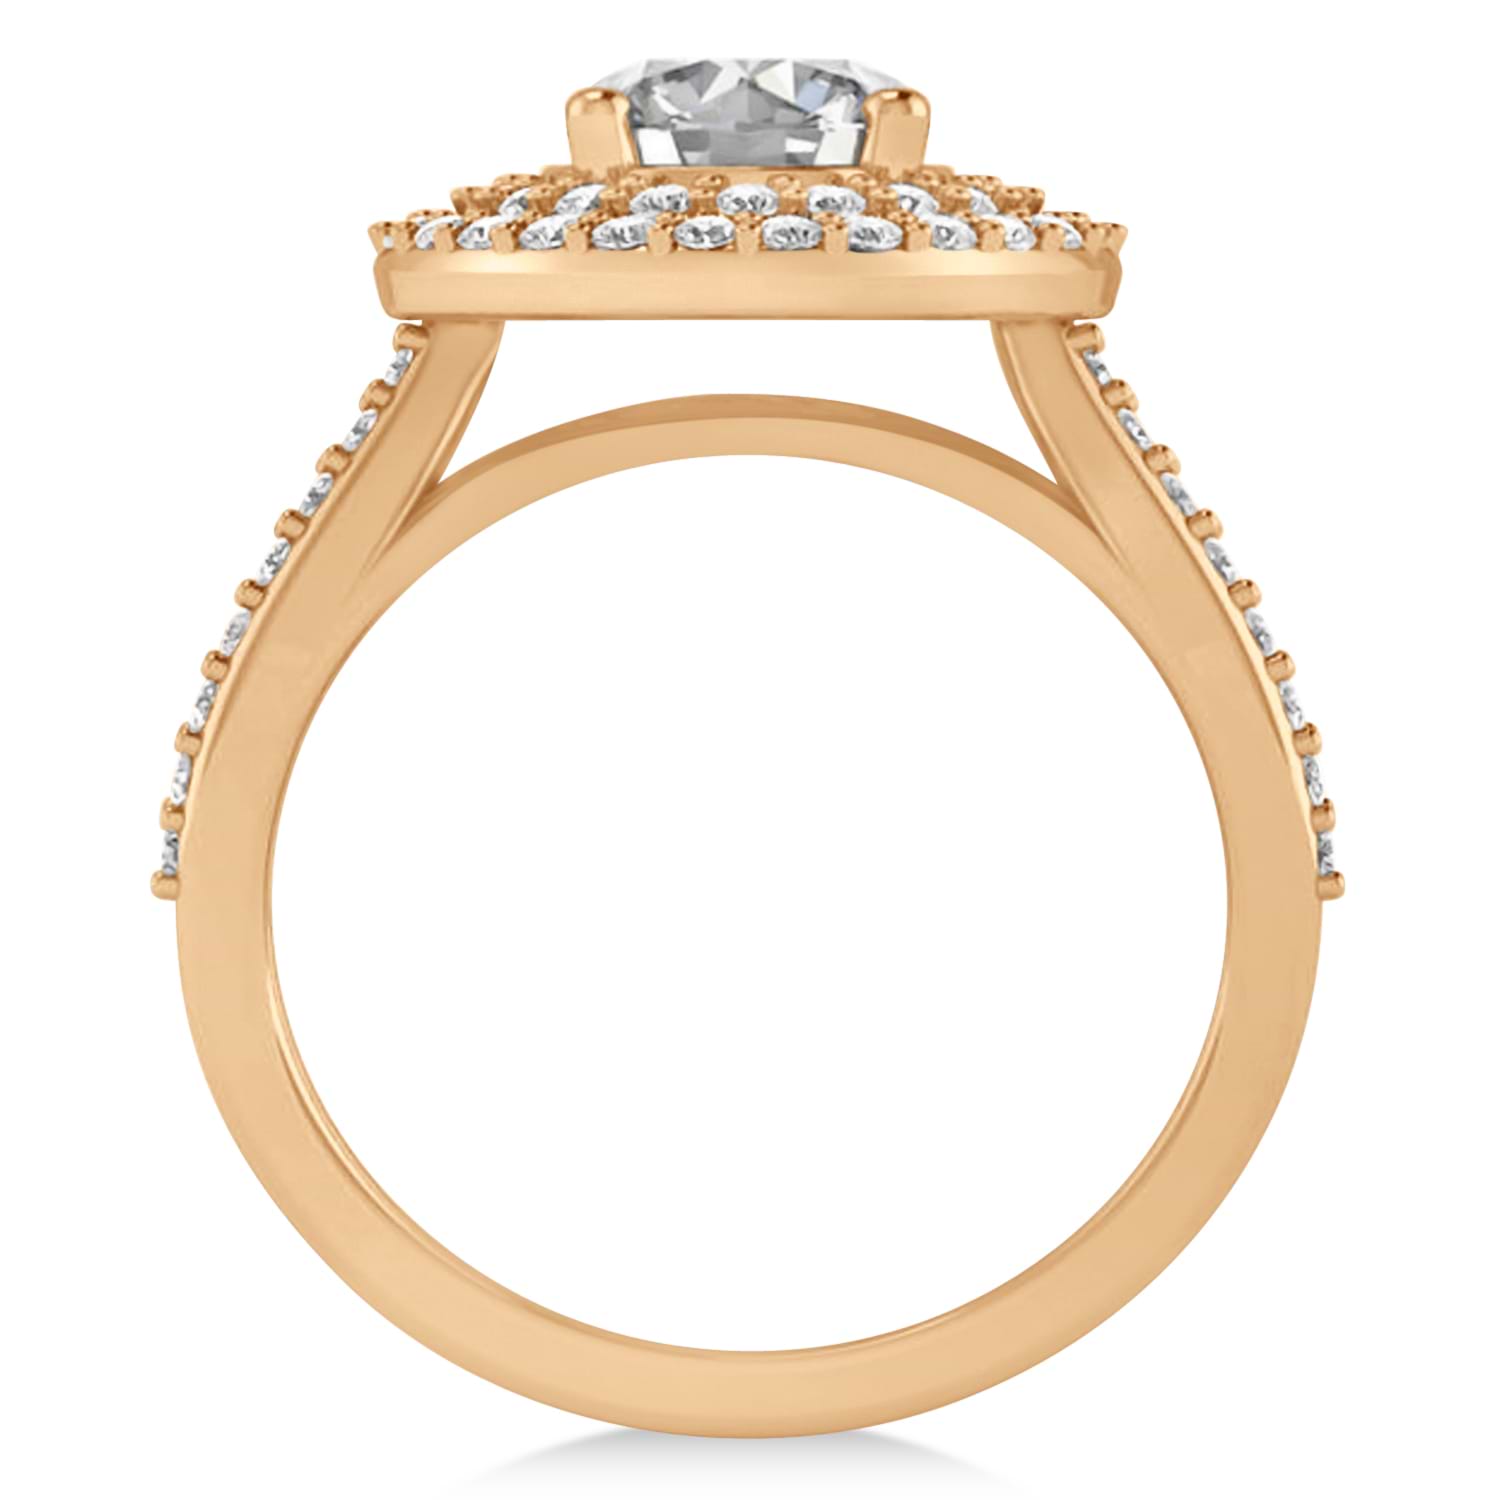 Double Halo Diamond Engagement Ring 14k Rose Gold (2.27ct)